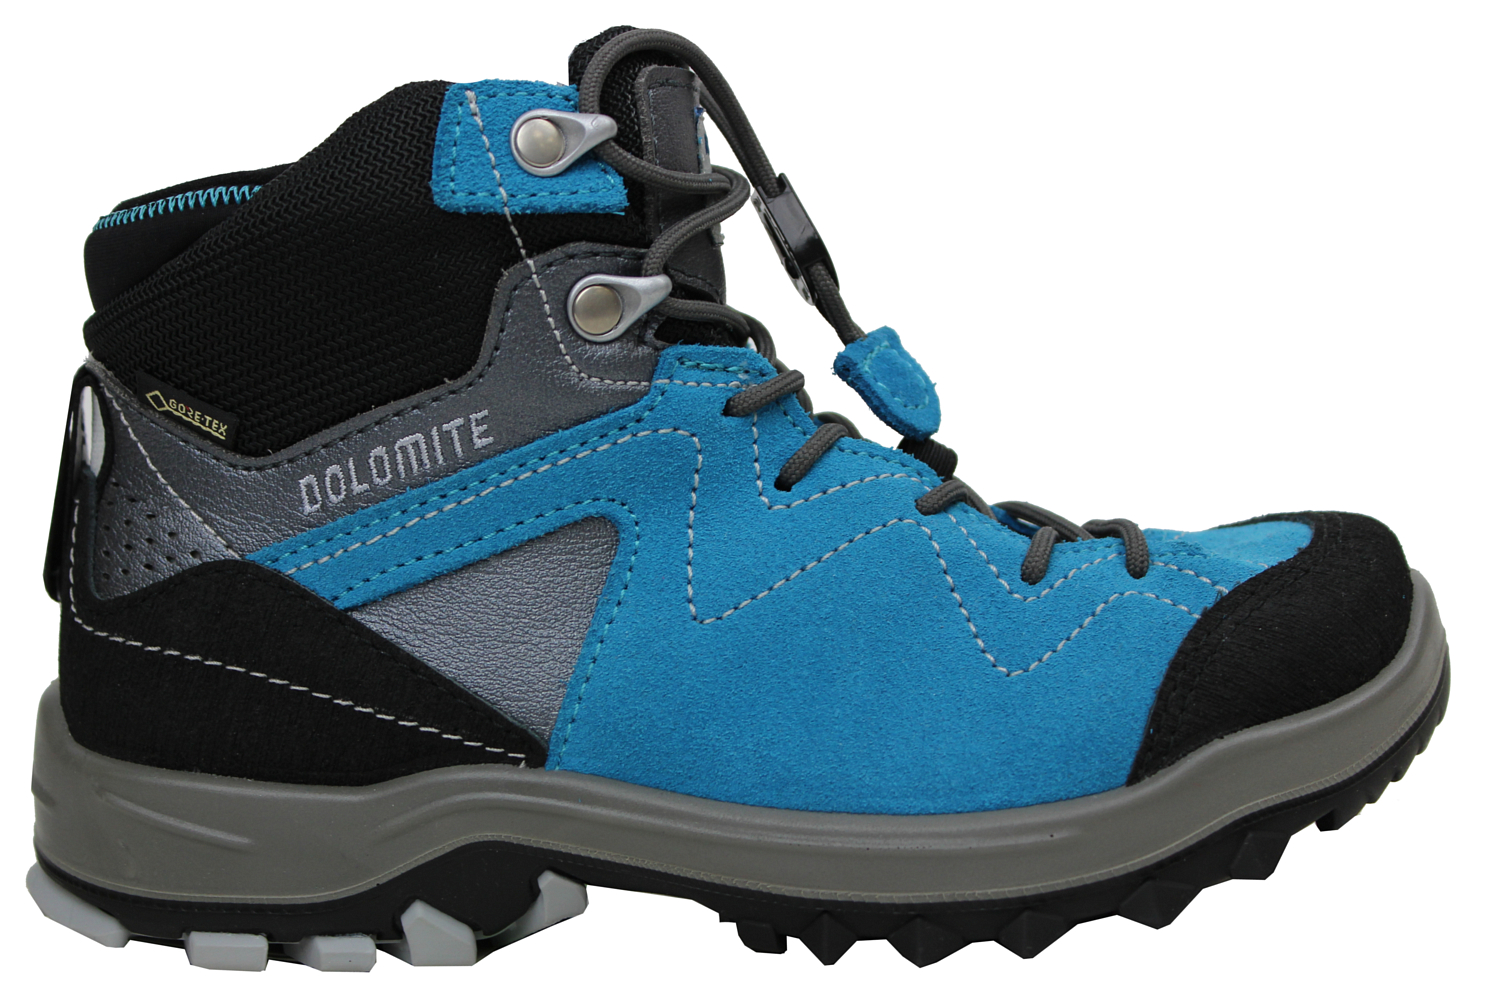 Ботинки Dolomite Steinbock GTX Jr Turquoise / бирюзовый